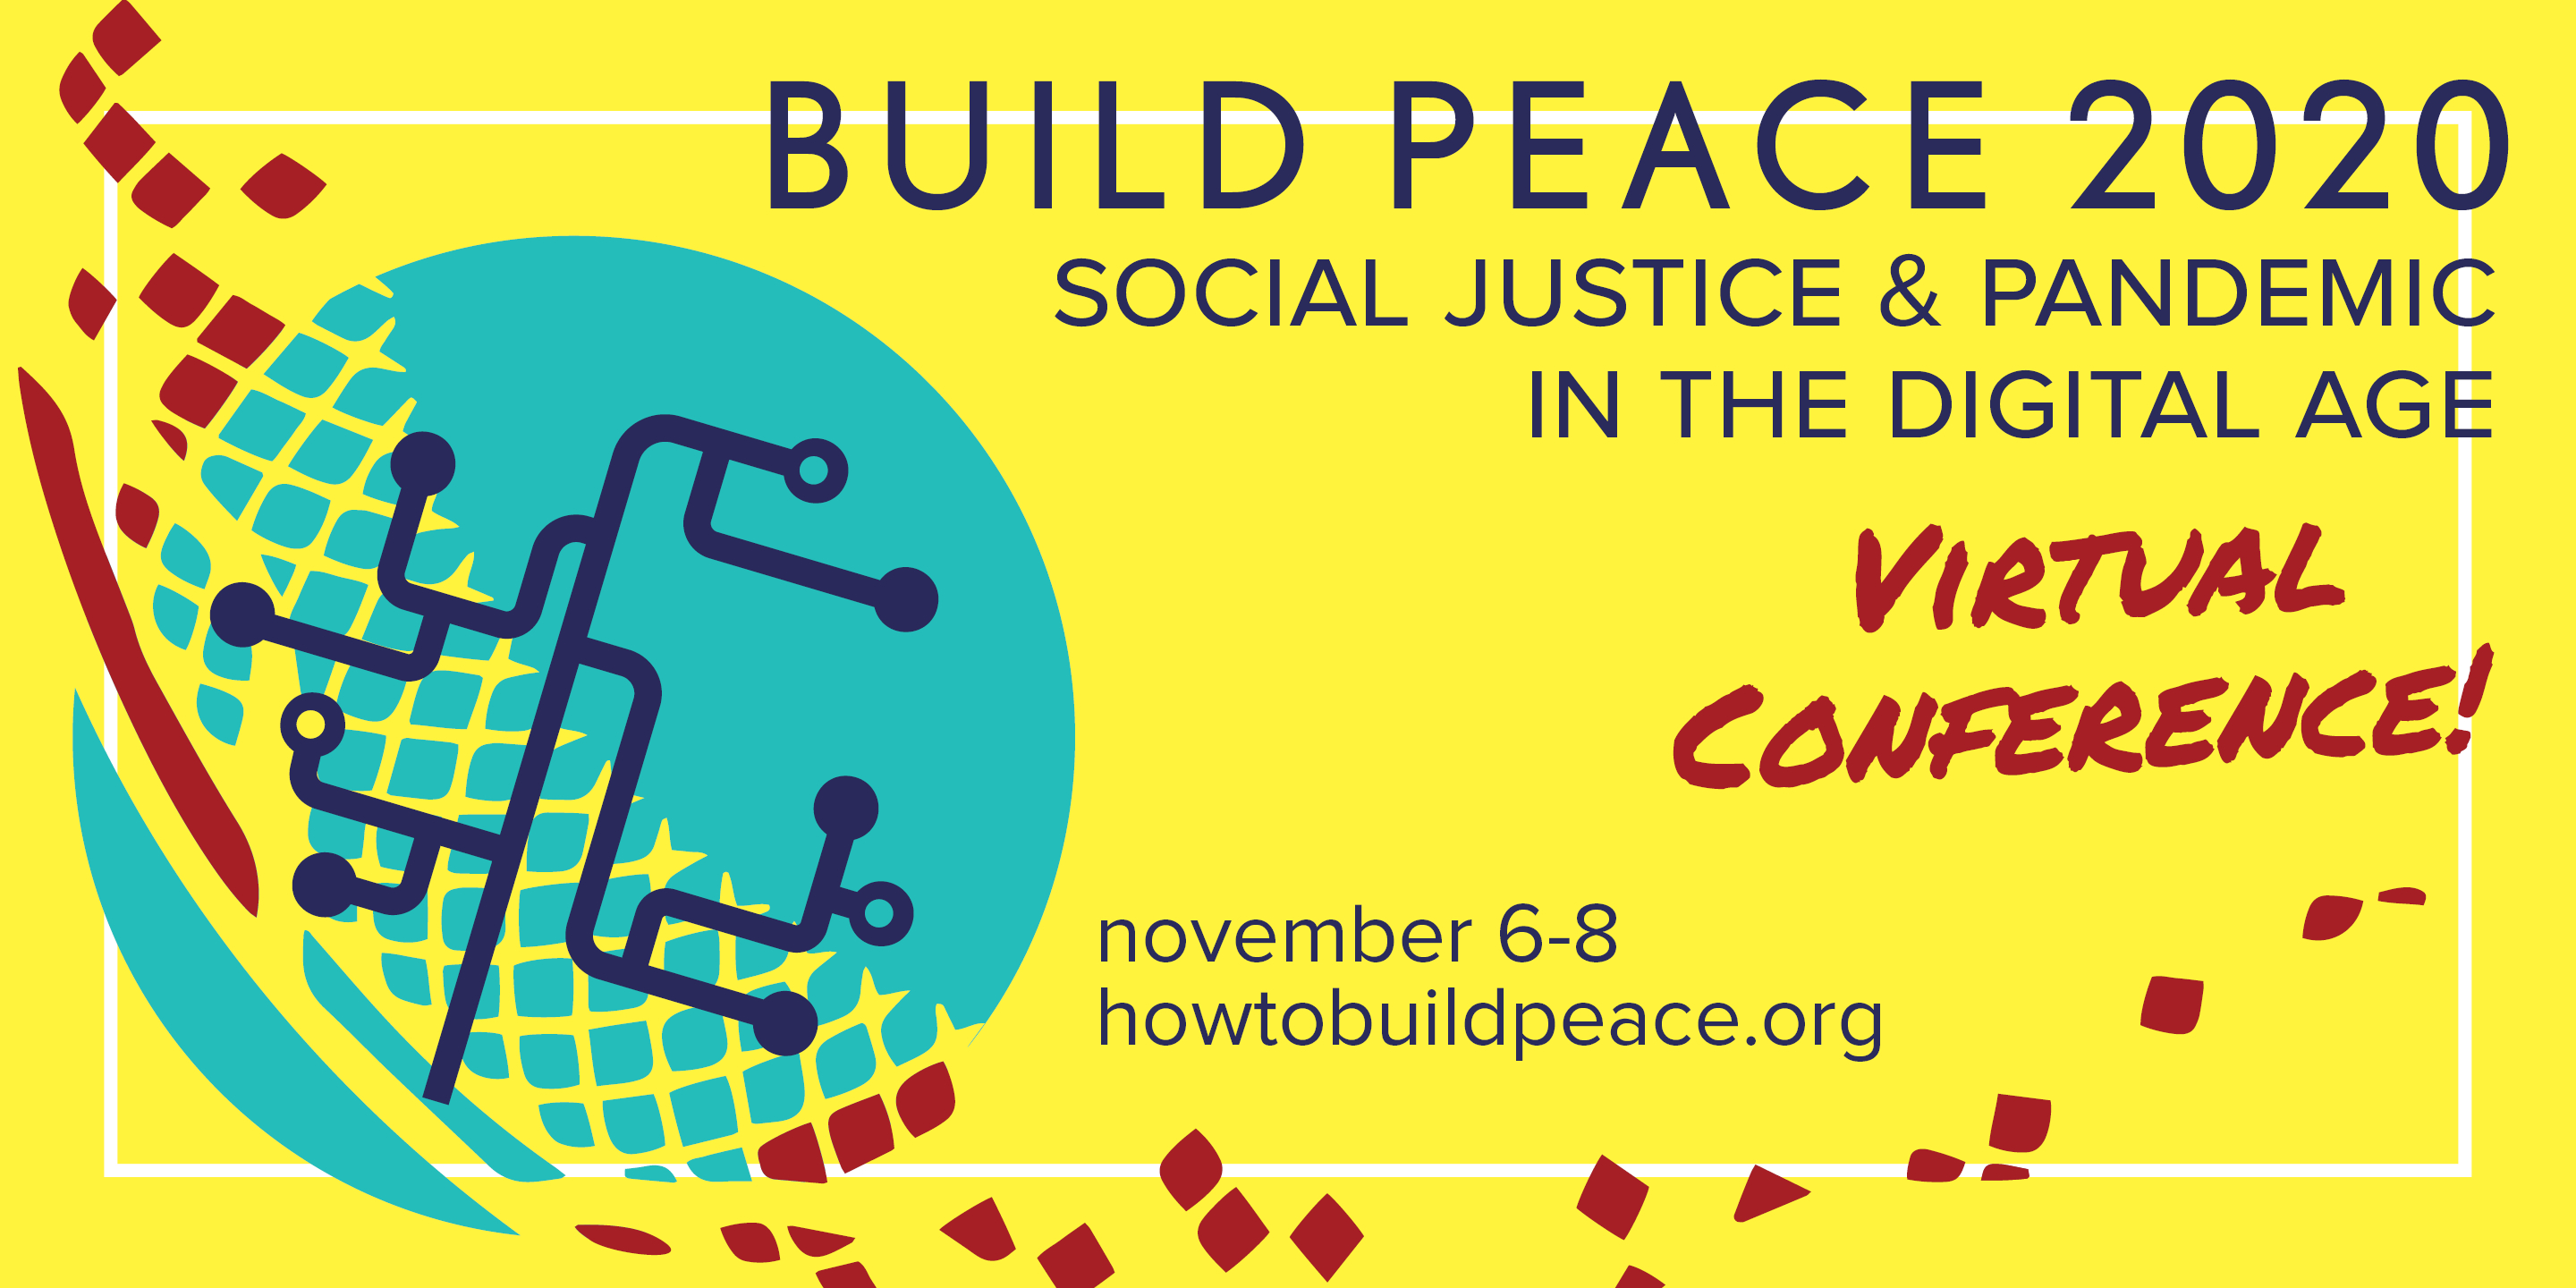 Build Peace 2020 event logo